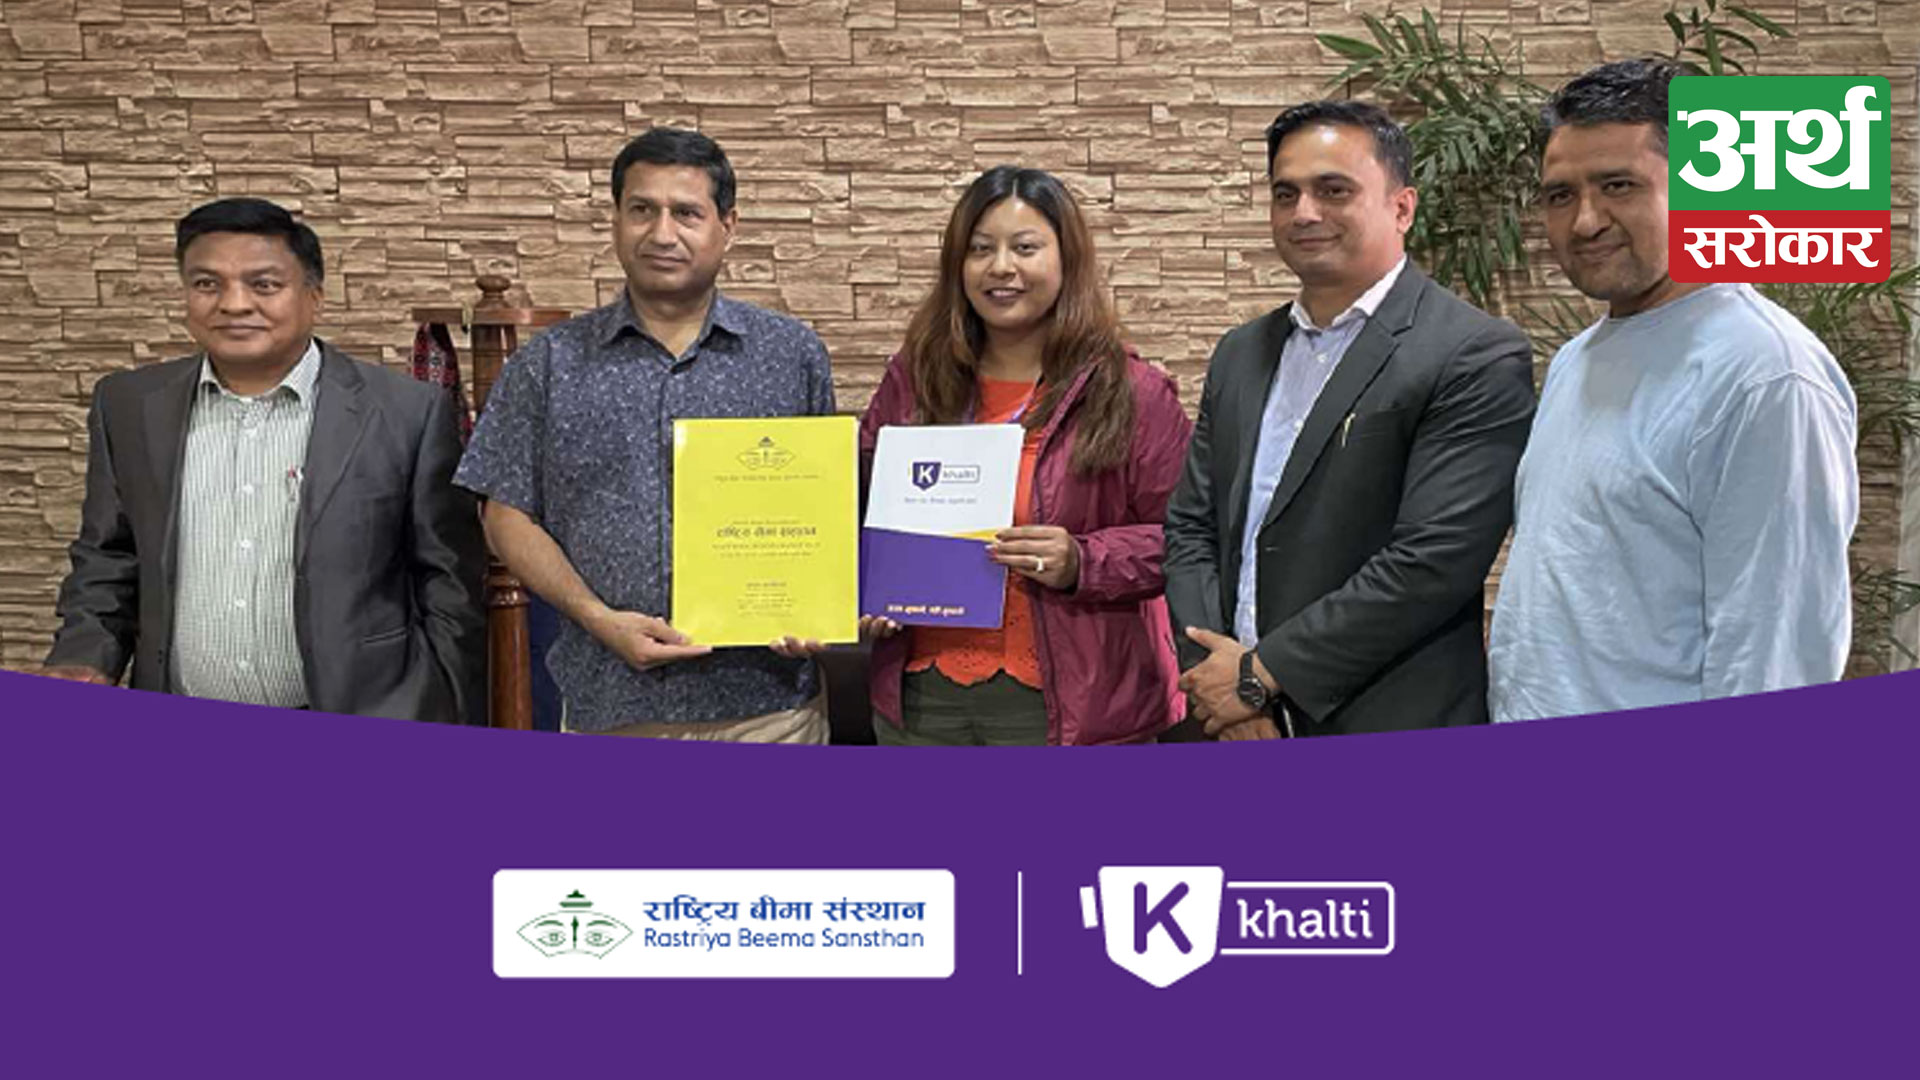 Partnership between Khalti and Rastriya Beema Sansthan for insurance premium payment